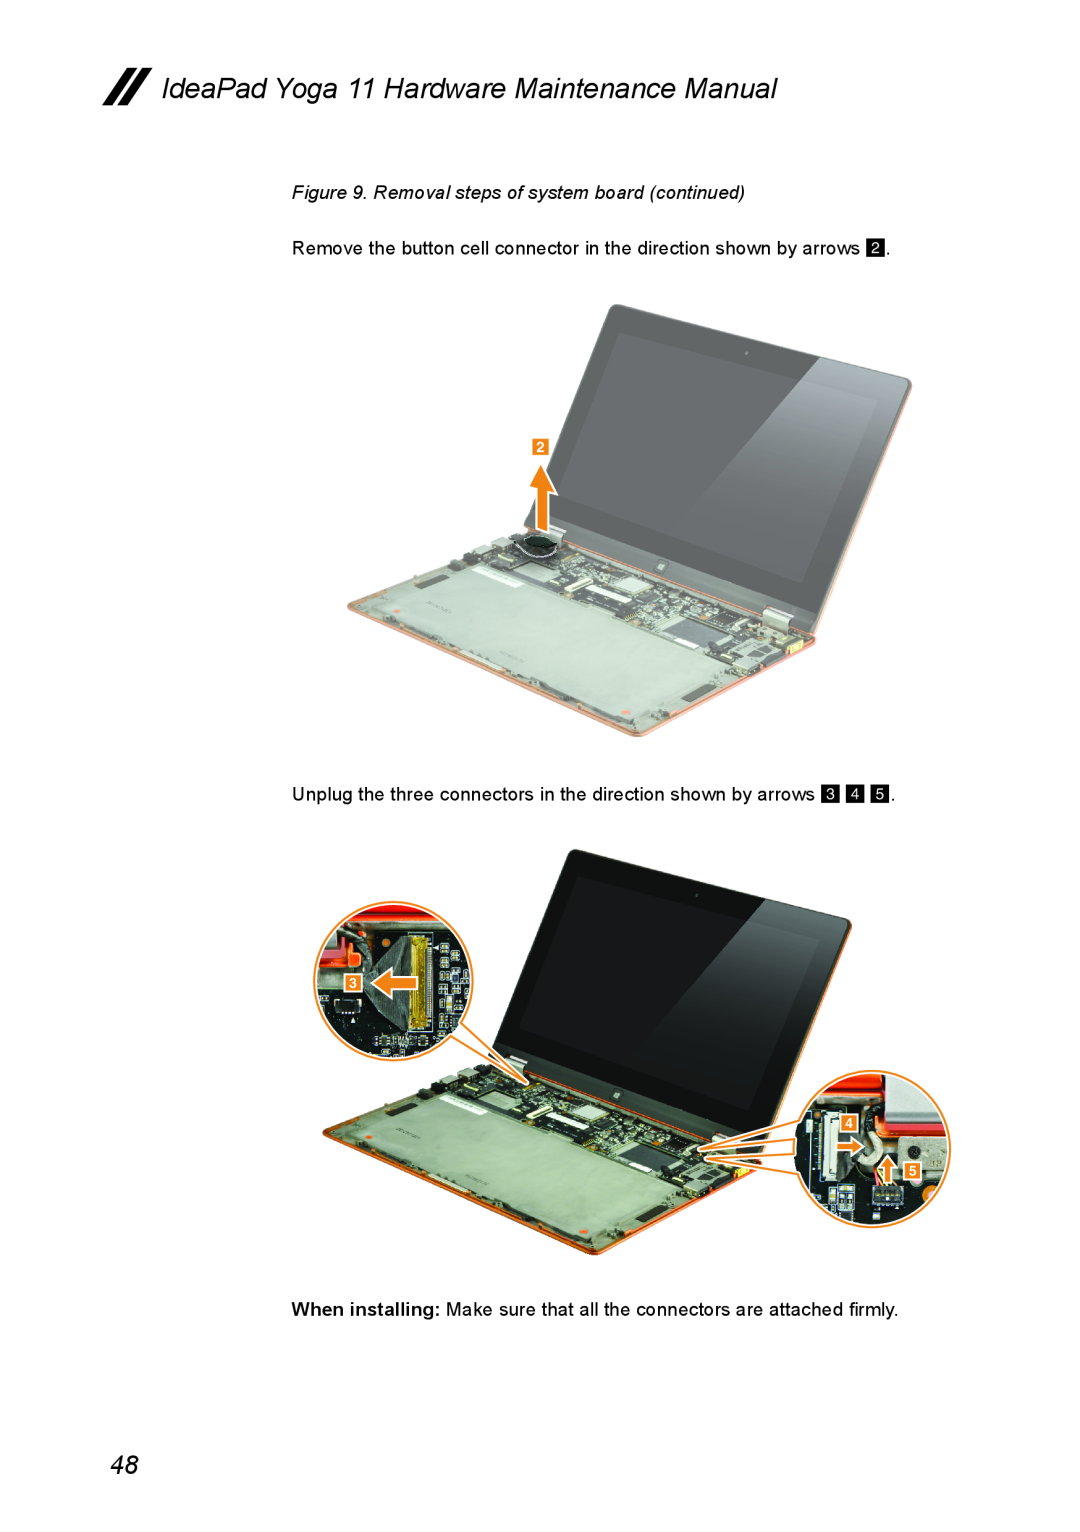 Lenovo manual Removal steps of system board continued, IdeaPad Yoga 11 Hardware Maintenance Manual 